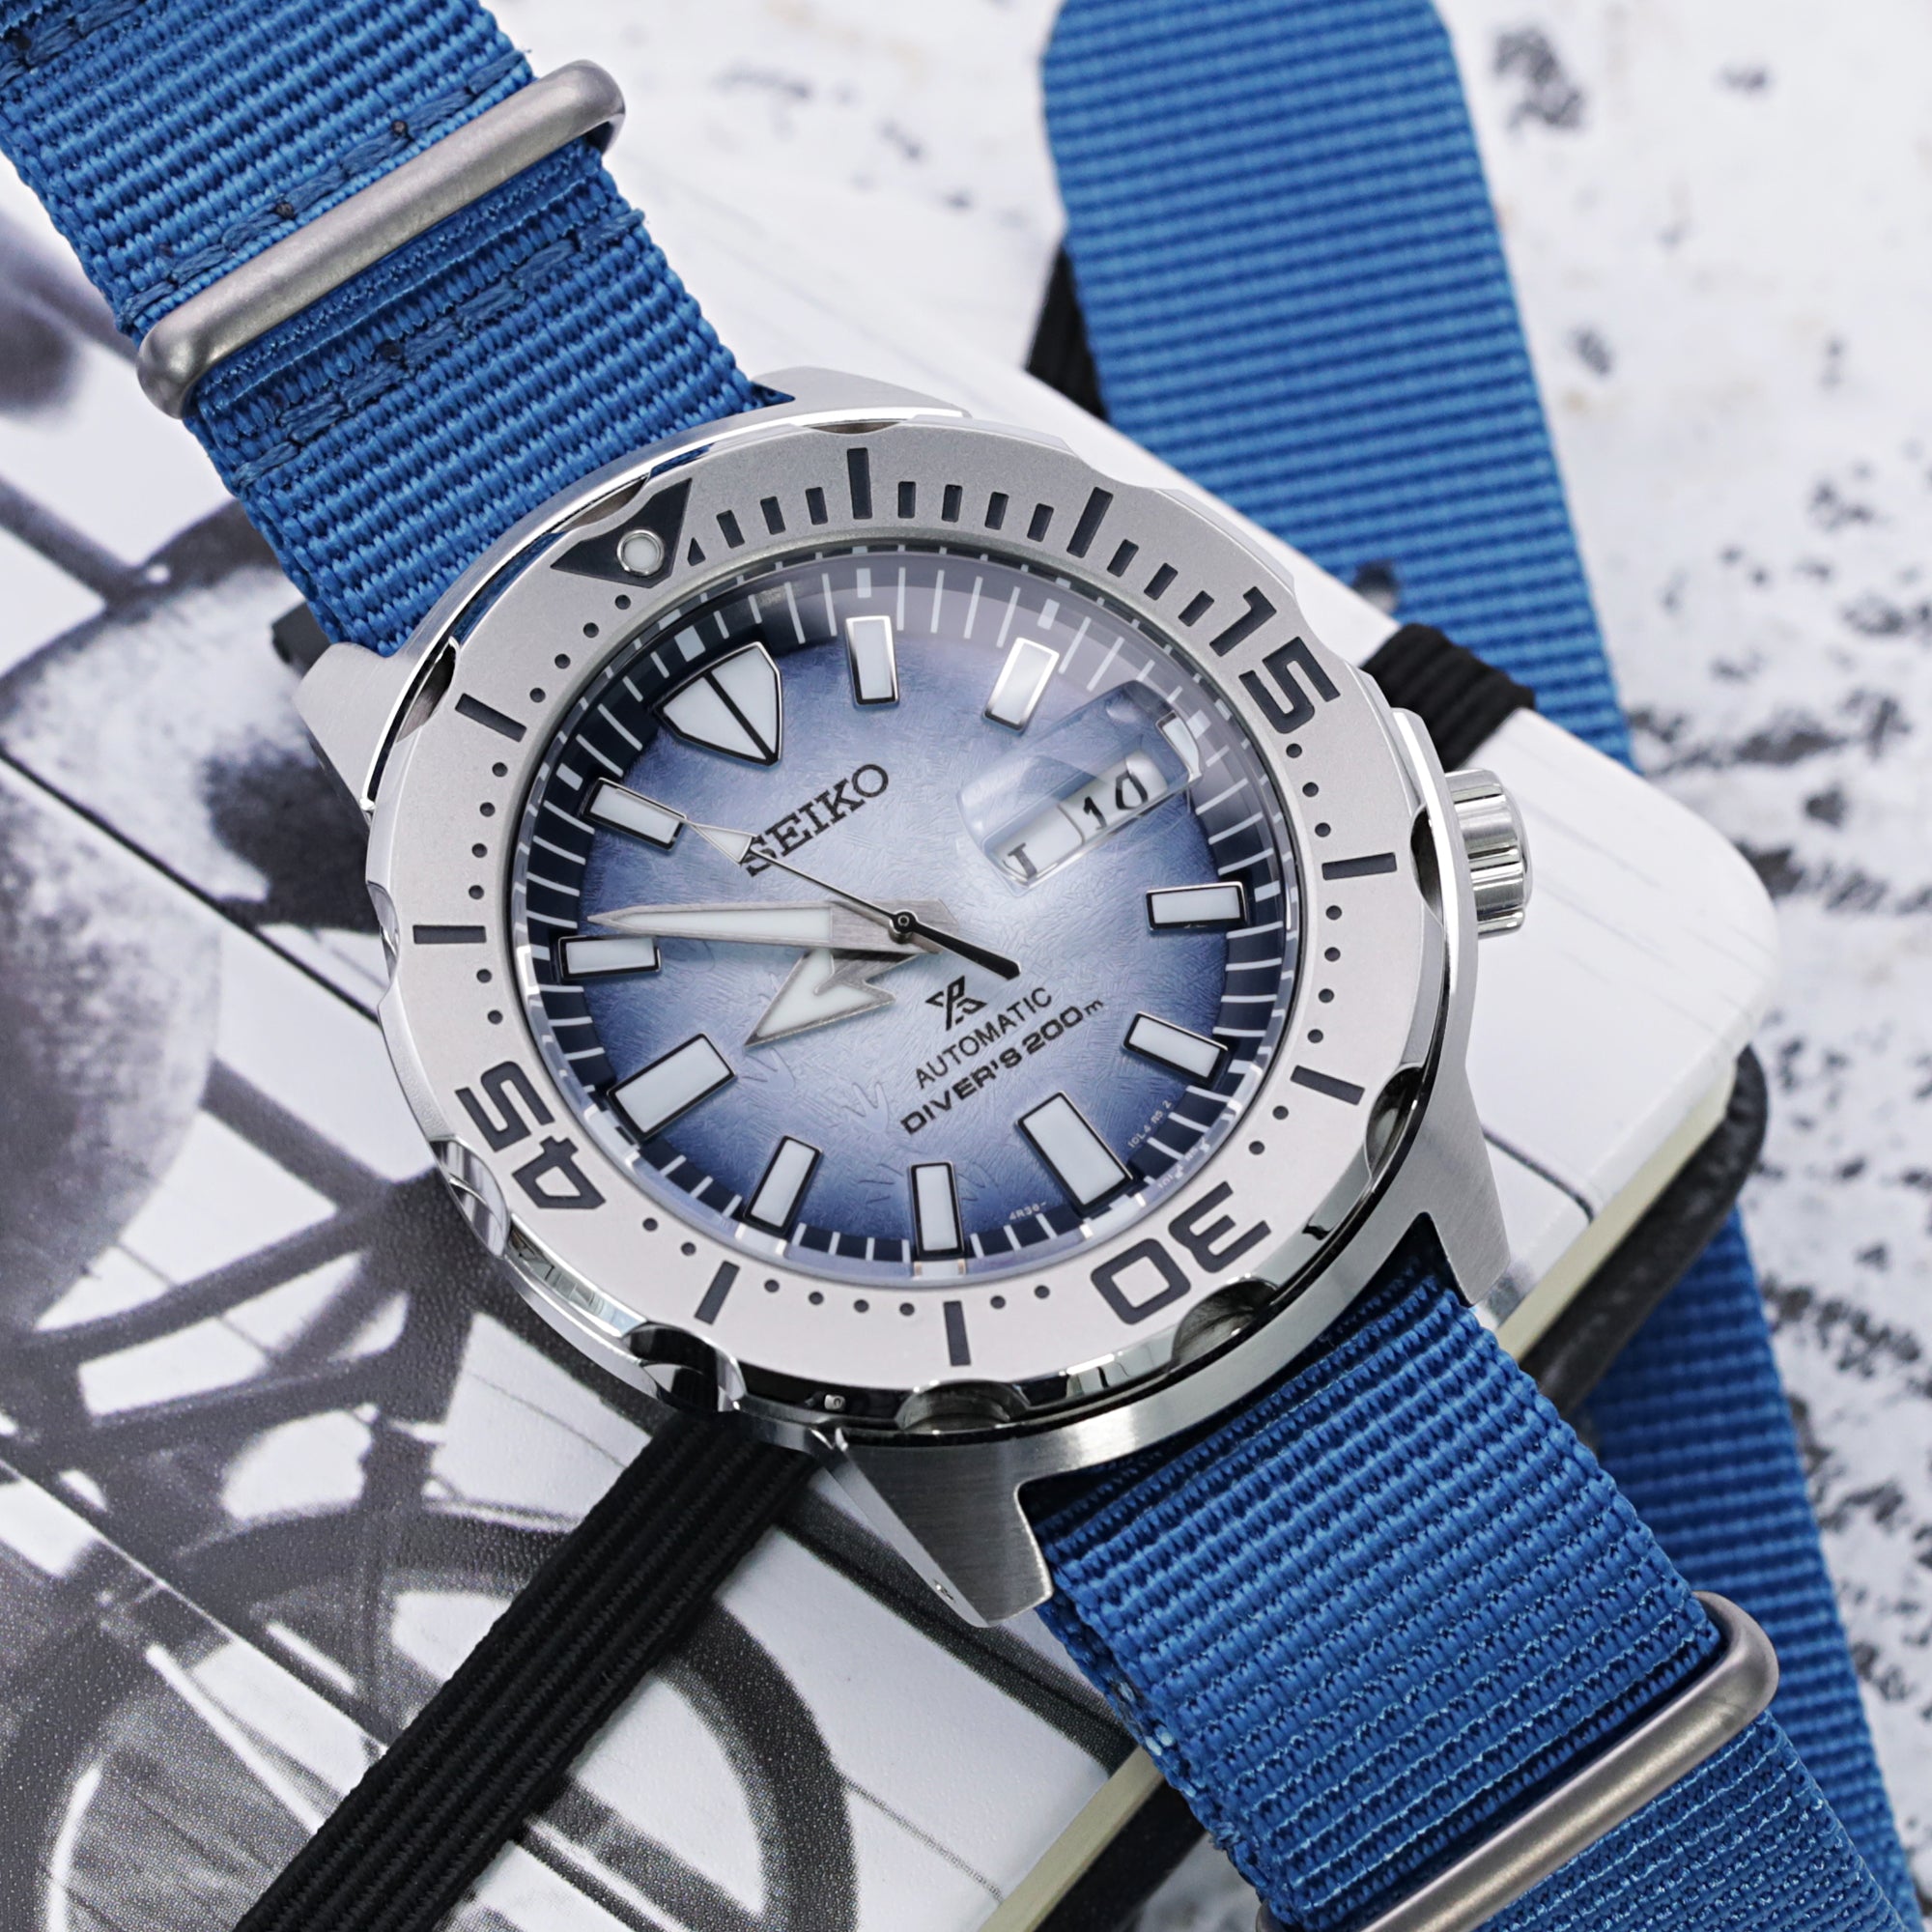 NATO 20mm G10 Military Watch Band Nylon Strap, Blue, Sandblasted, 260mm